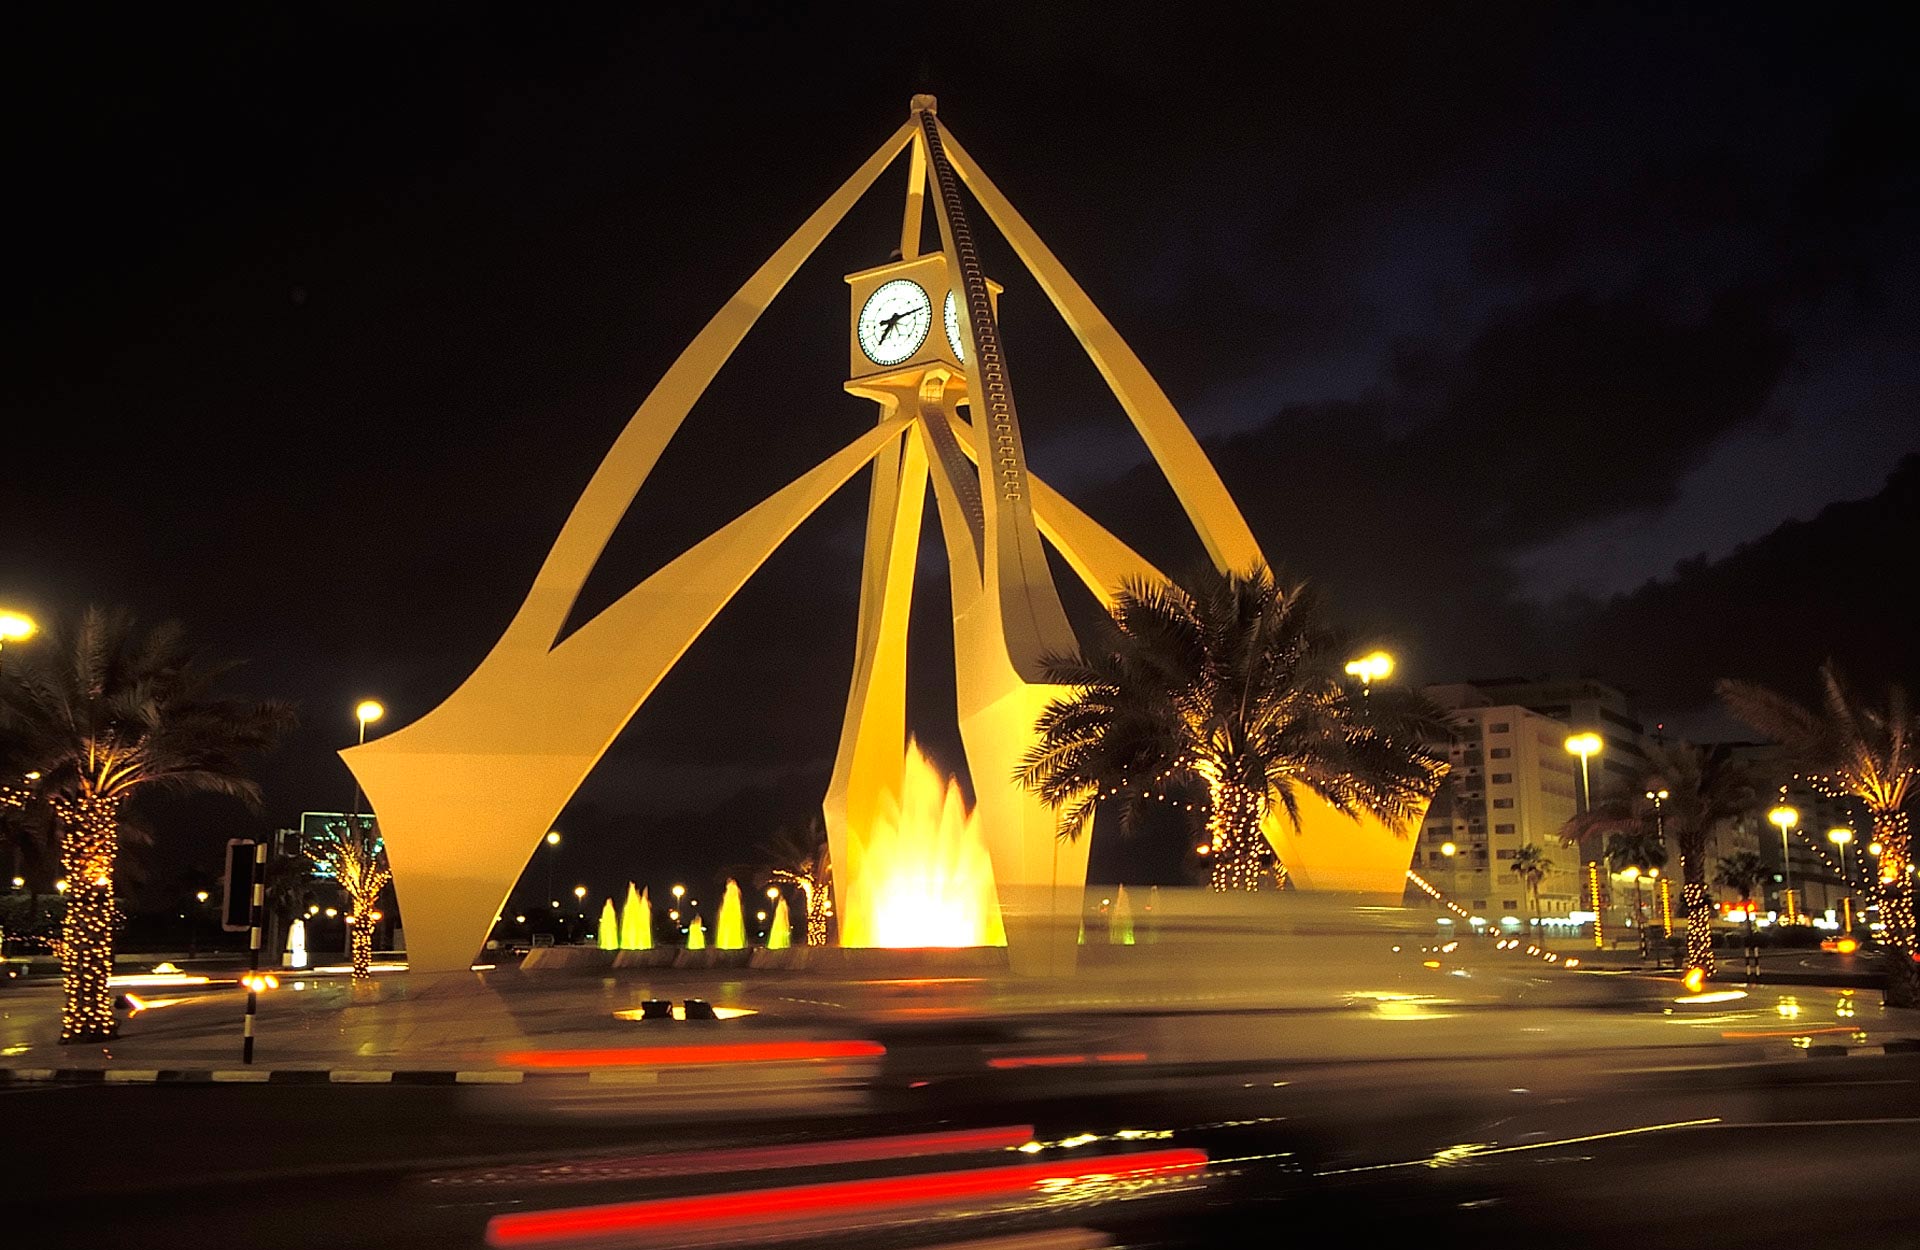 Clock tower on the Corniche Roundabout at night, Dubai, United Arab Emirates